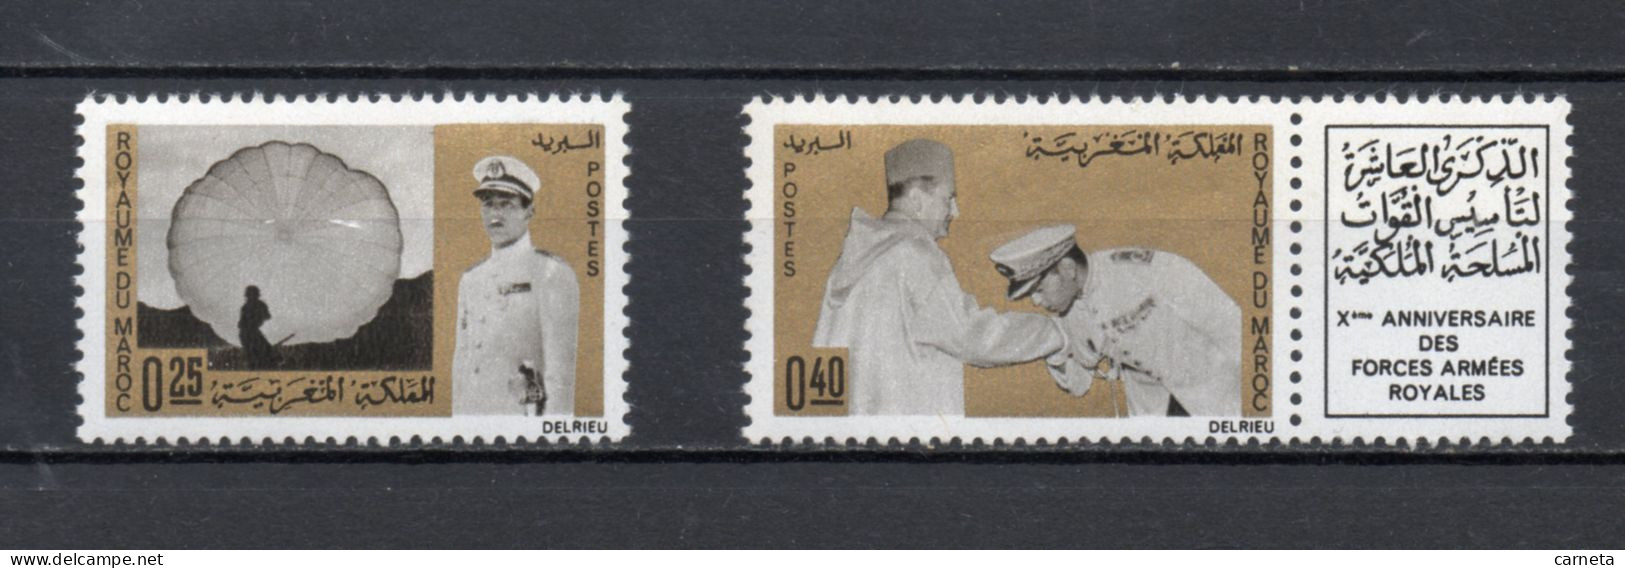 MAROC N°  504 + 505    NEUFS SANS CHARNIERE  COTE 1.60€   ROI HASSAN II ARMEE - Marruecos (1956-...)